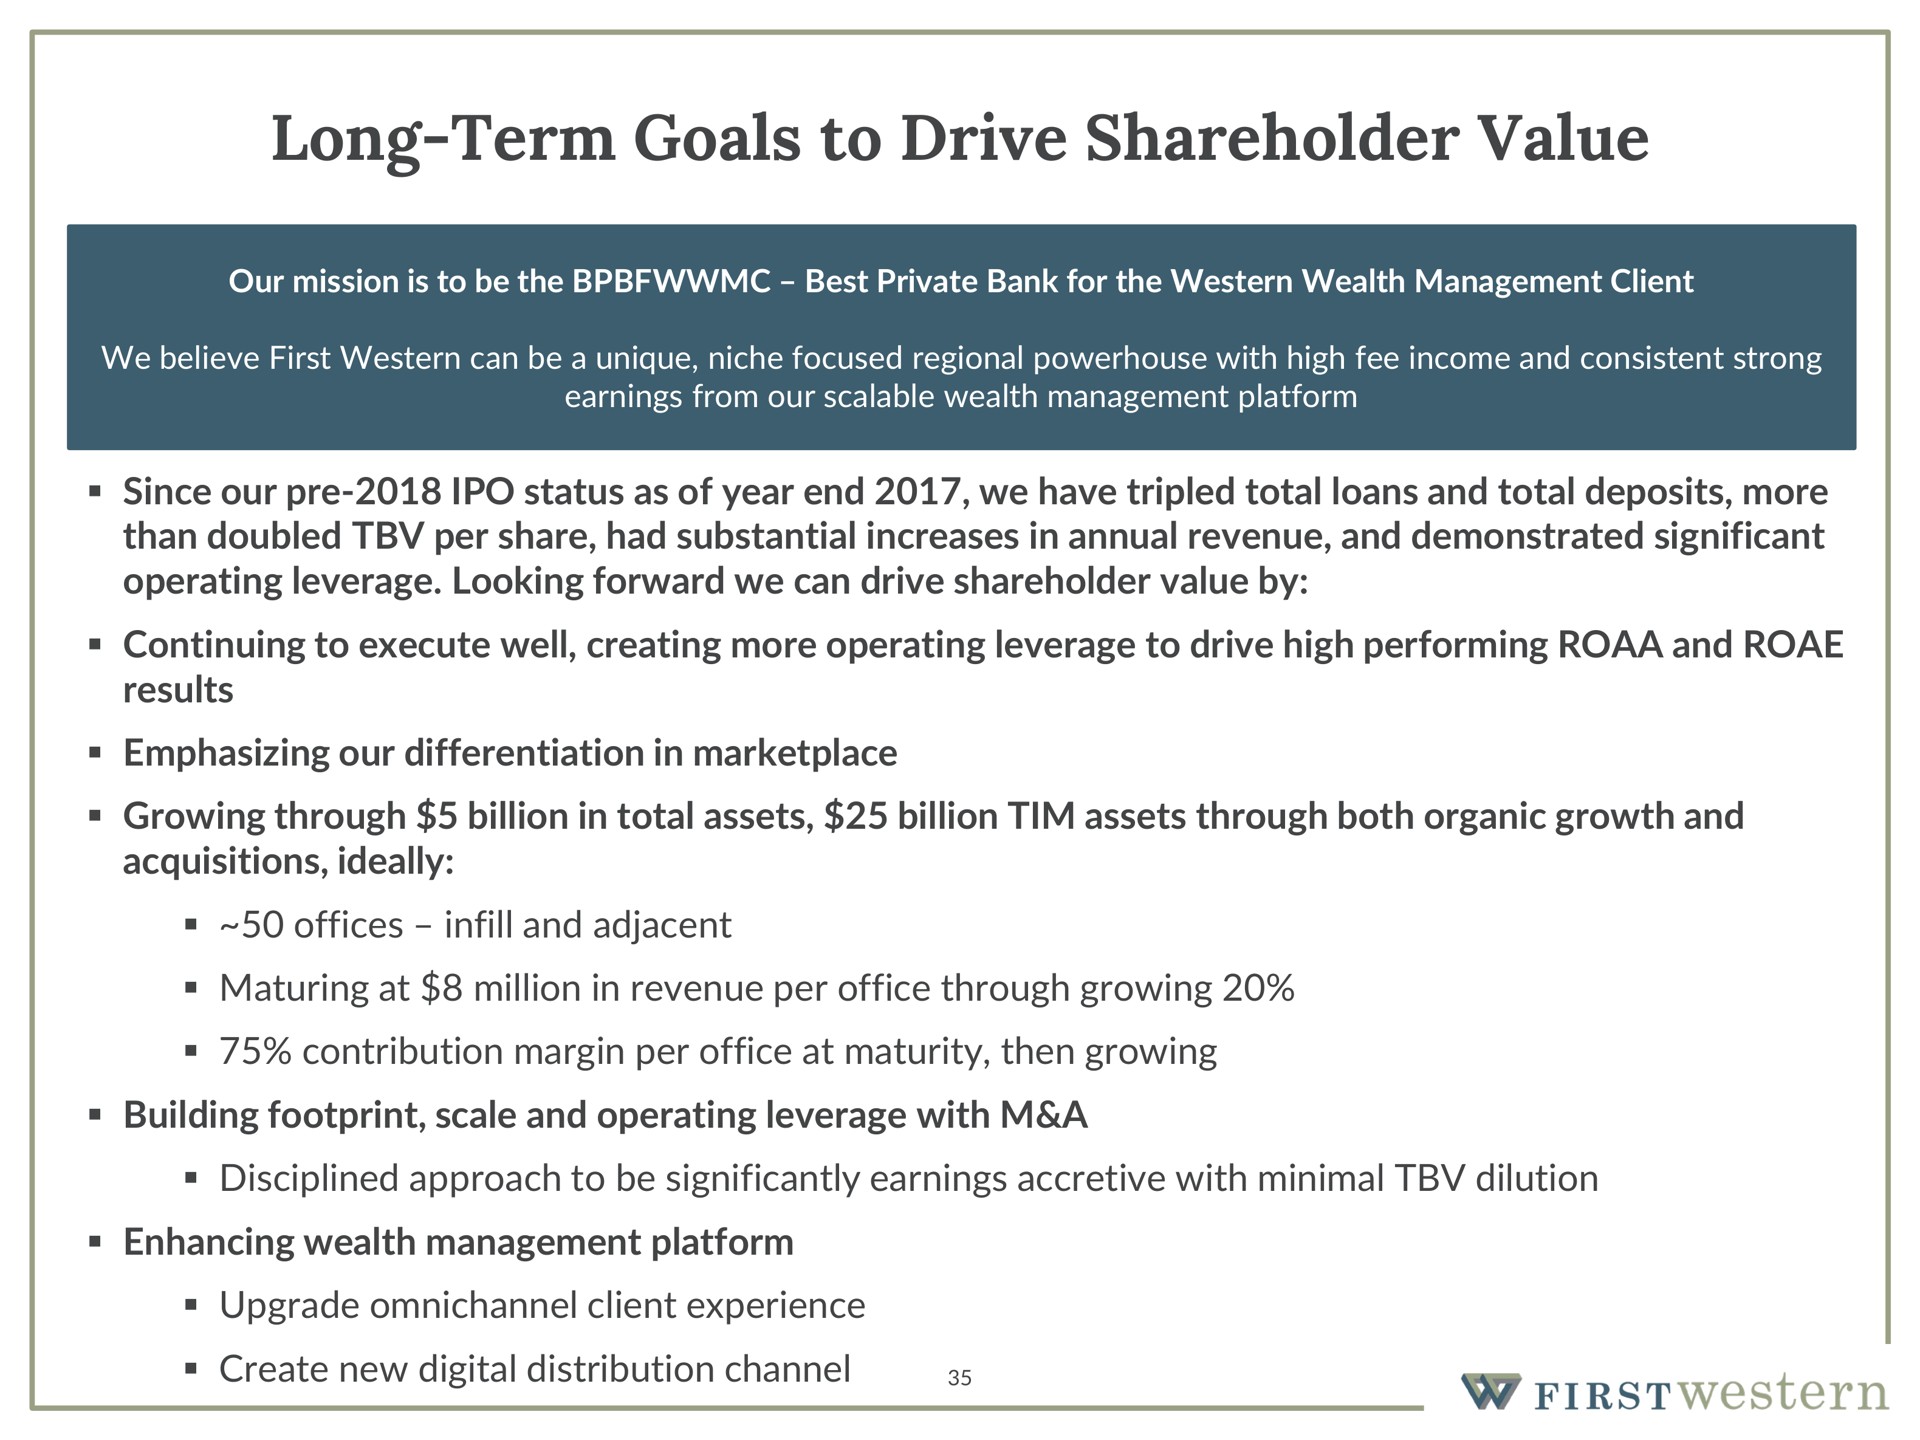 long term goals to drive shareholder value | First Western Financial